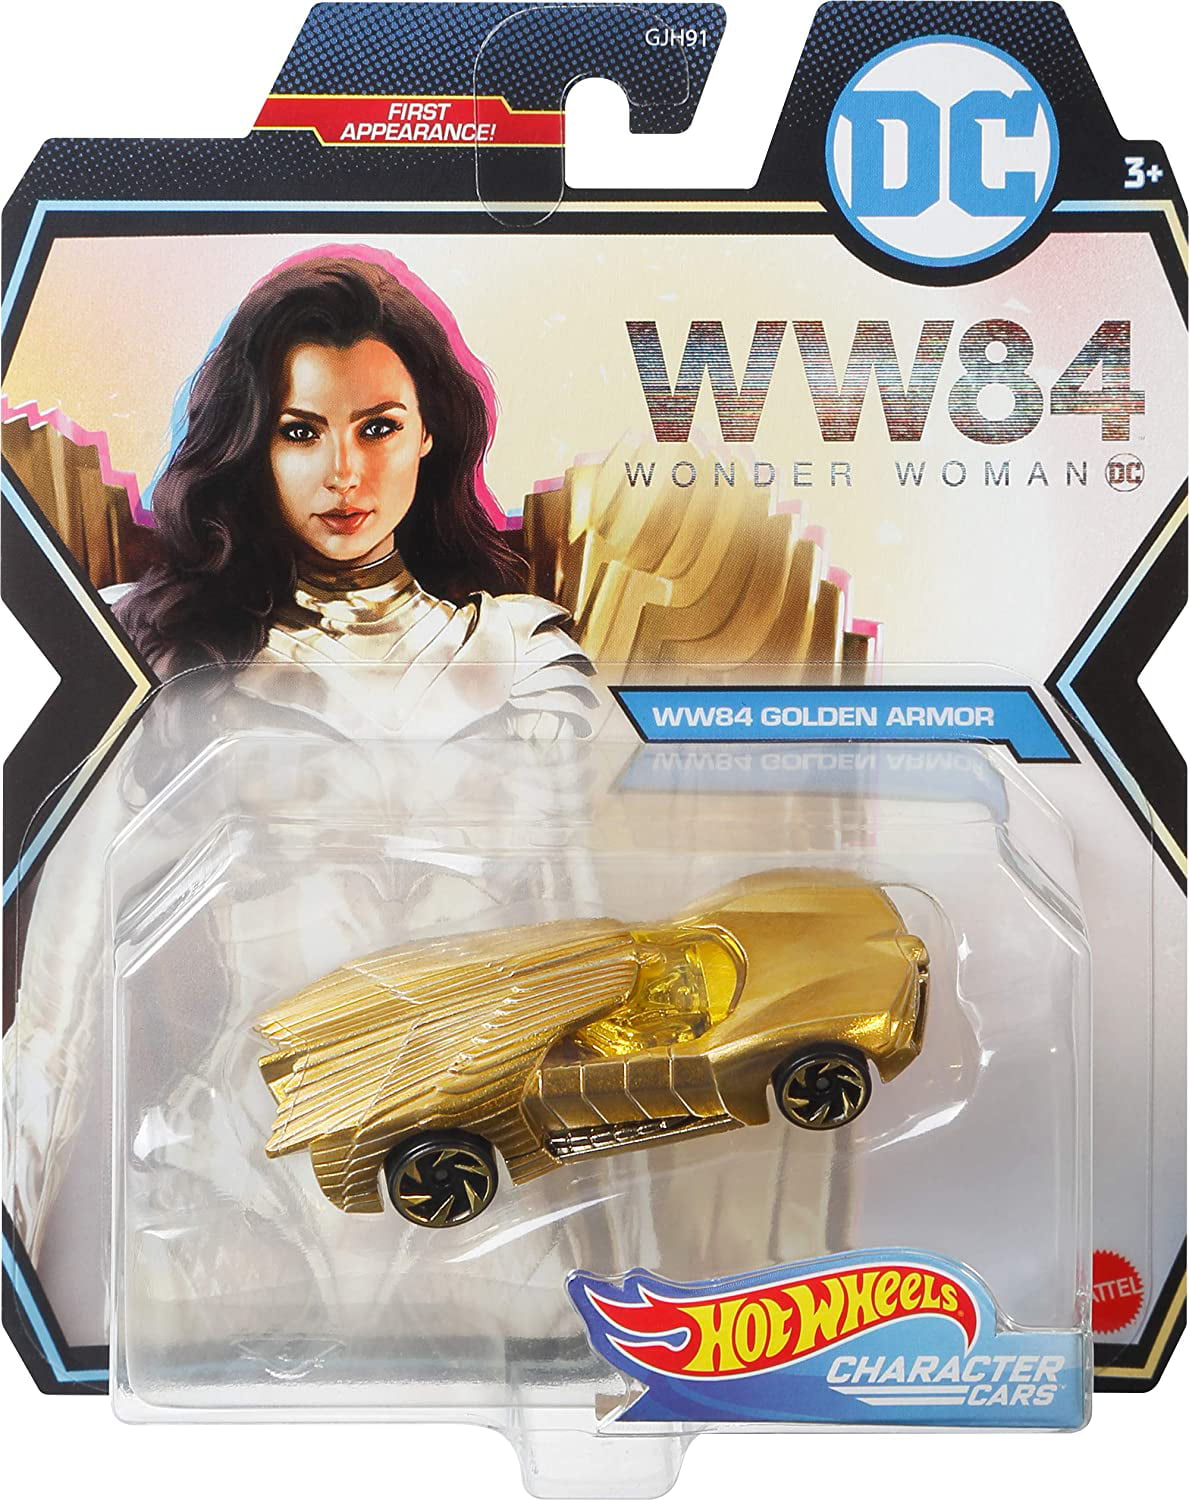 Wonder Woman Hot Wheels 2020 DC Universe Wonder Woman WW84 Character Cars 